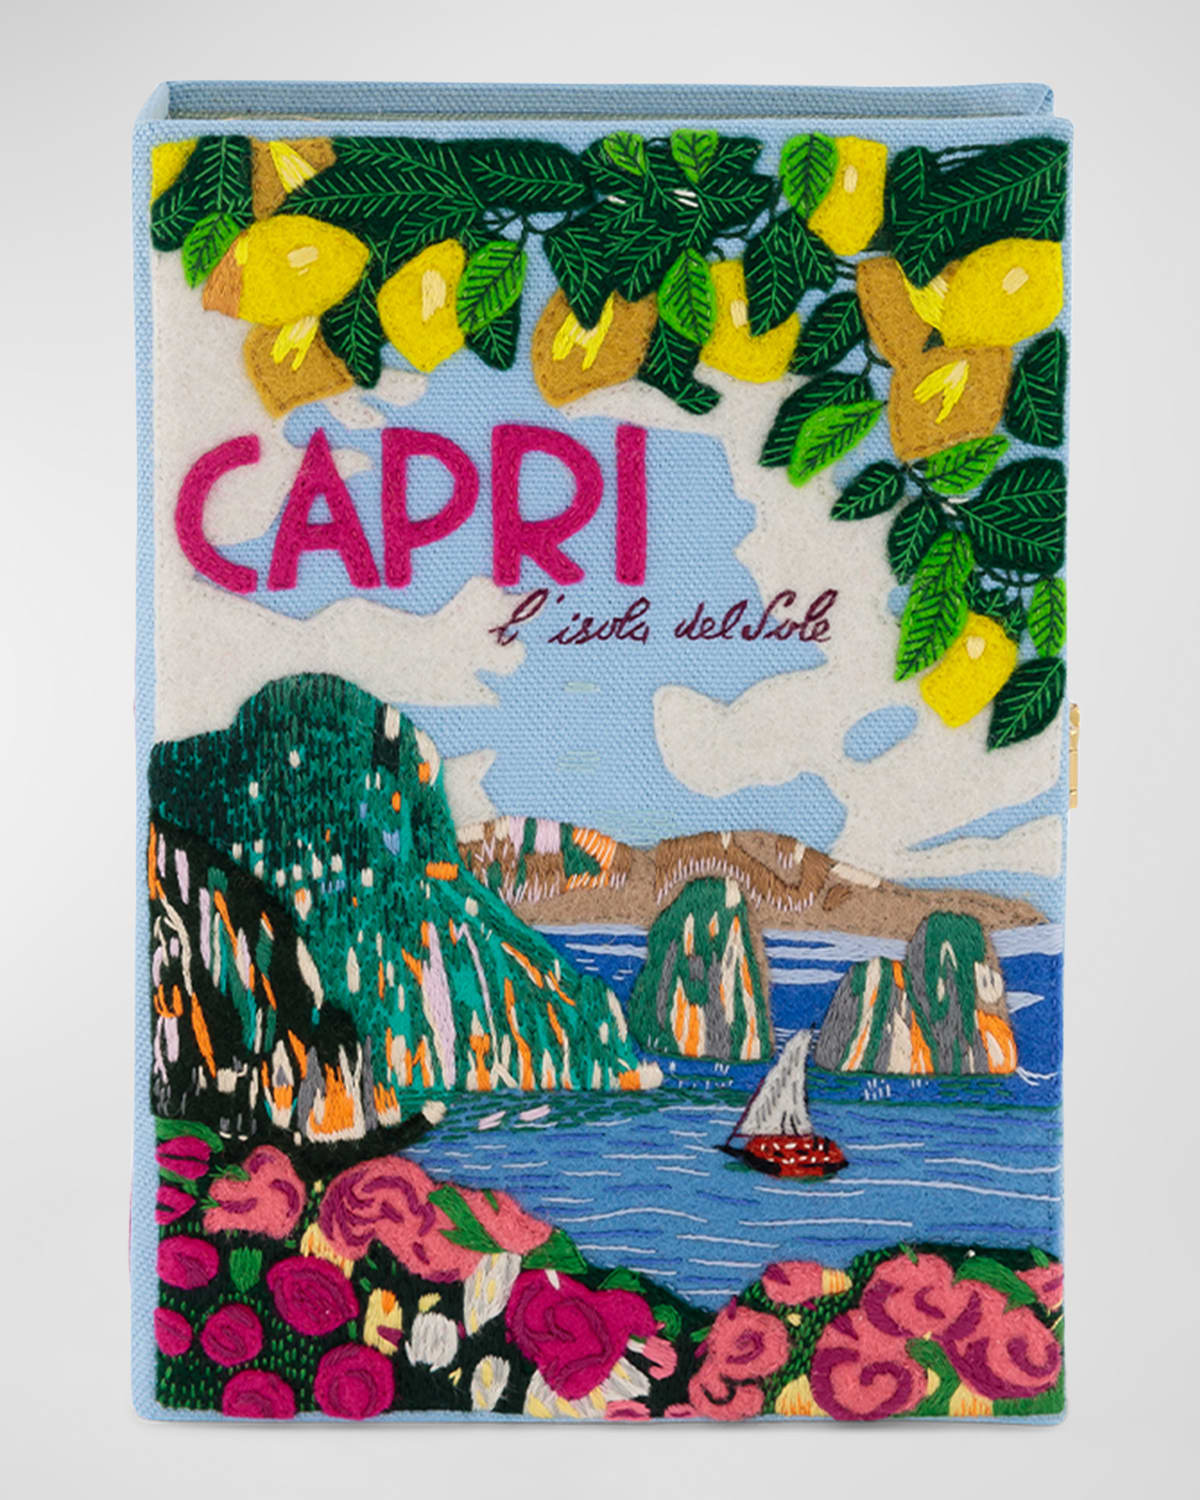 Capri Lemons Mer Bio Book Clutch Bag